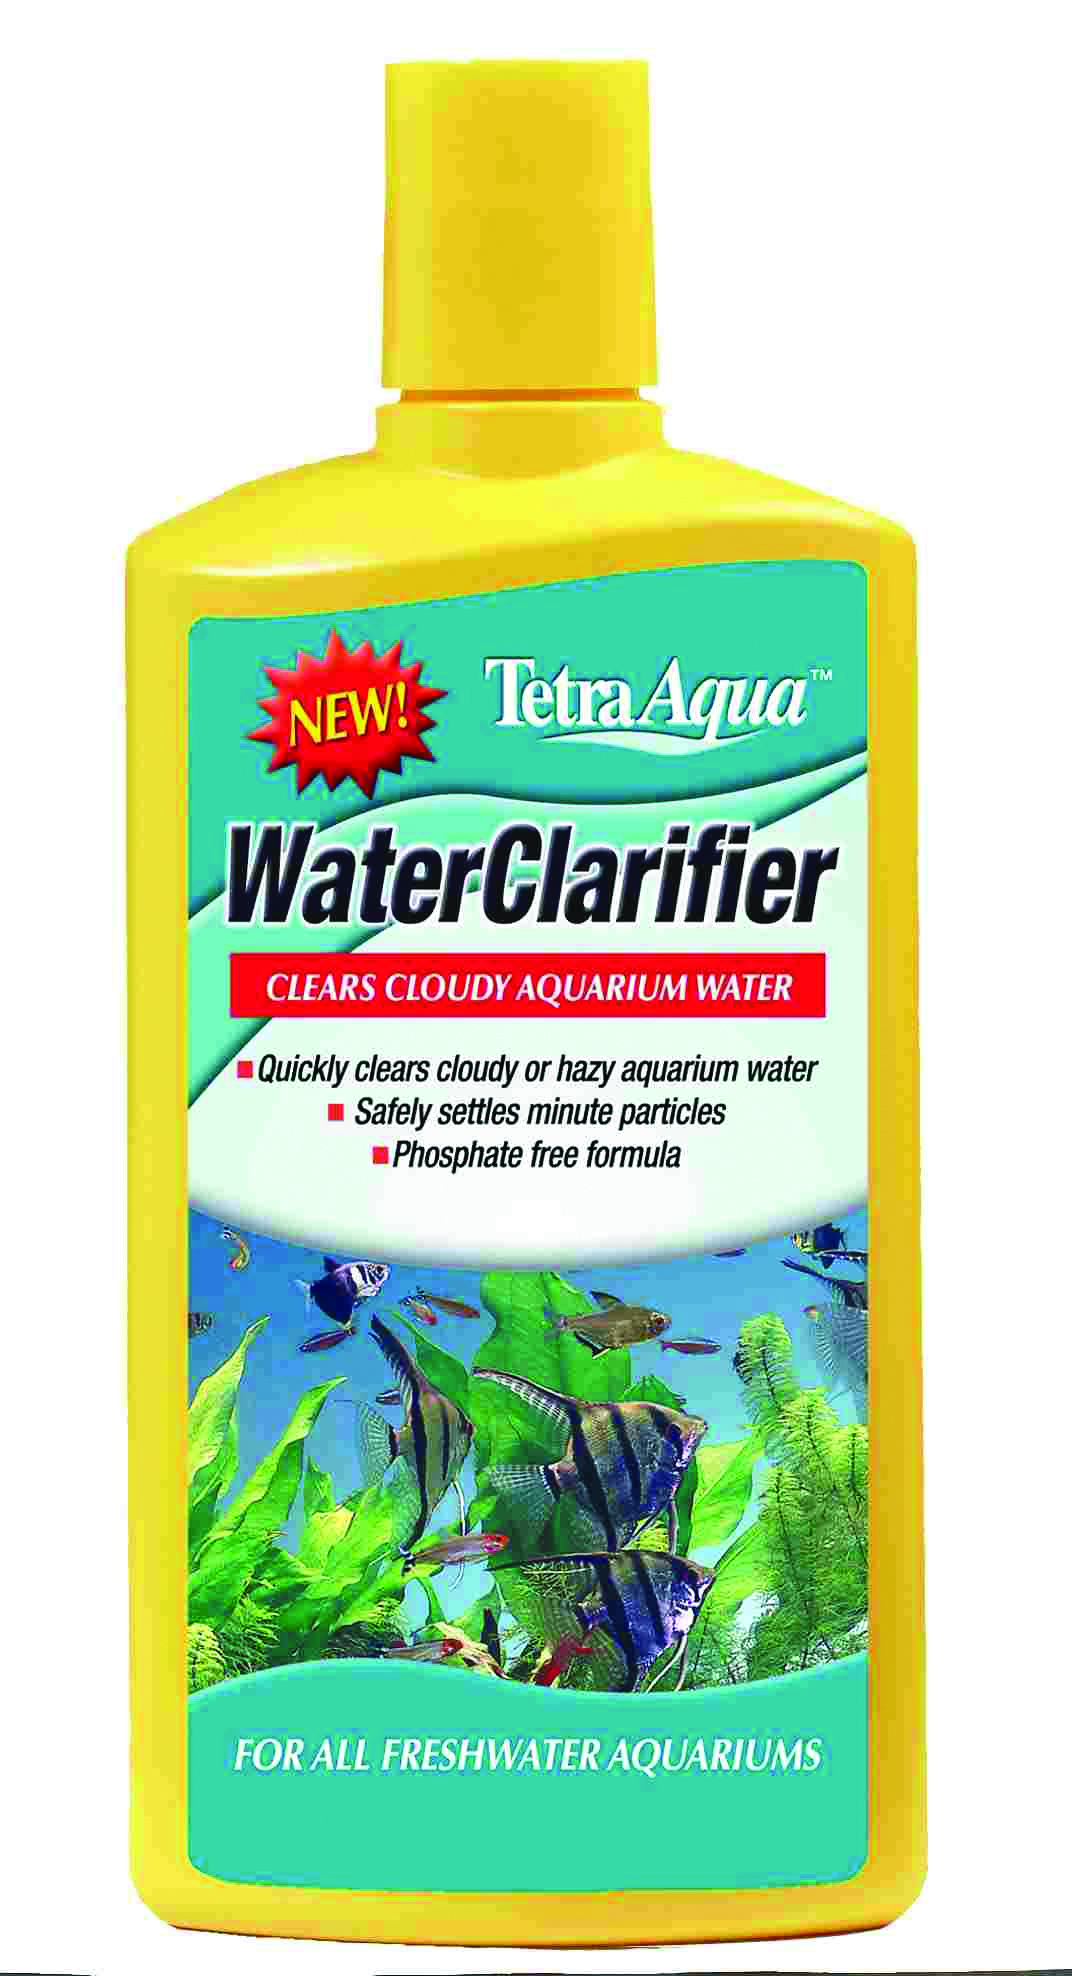 WATER CLARIFIER